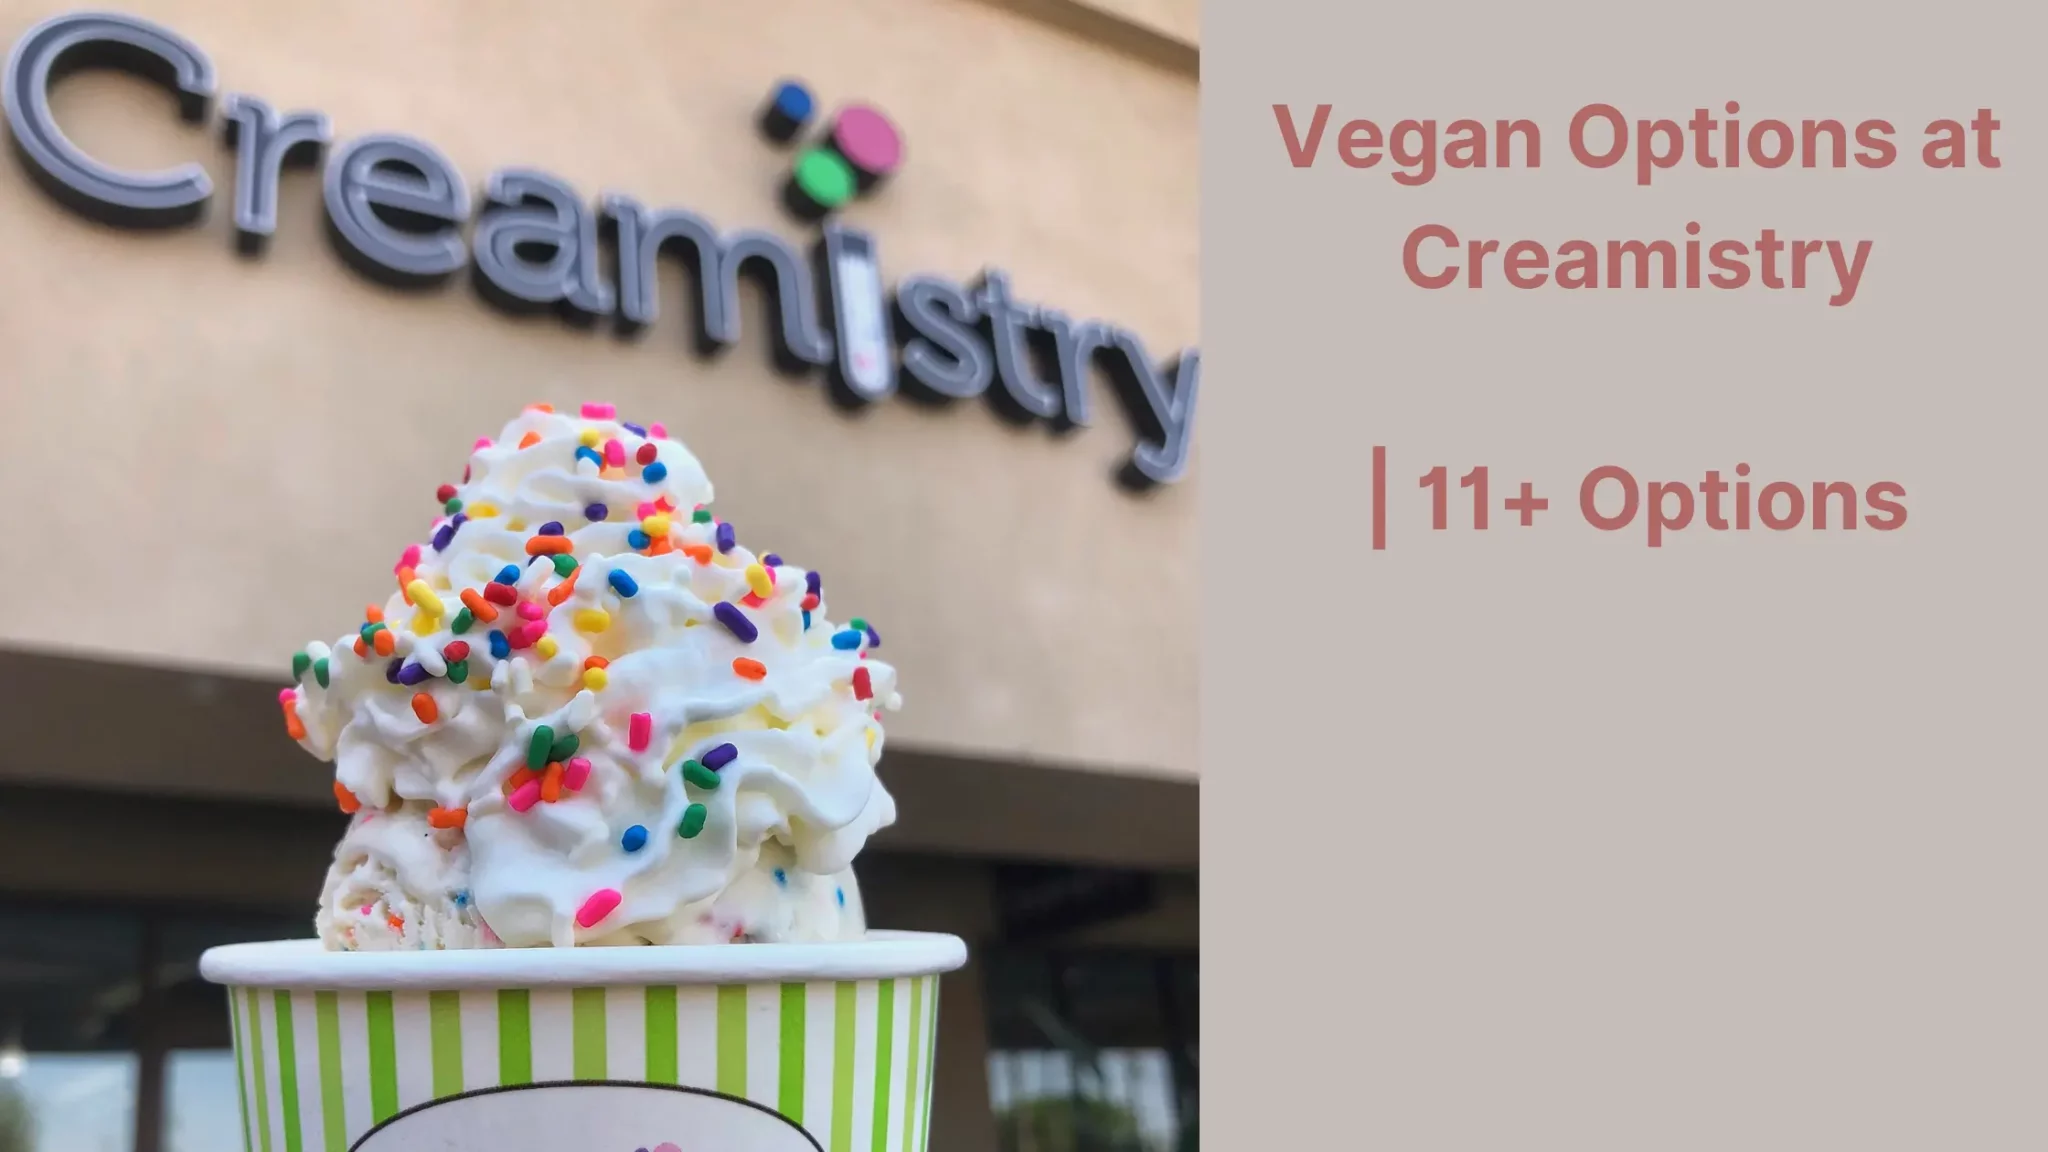 Vegan Options at Creamistry